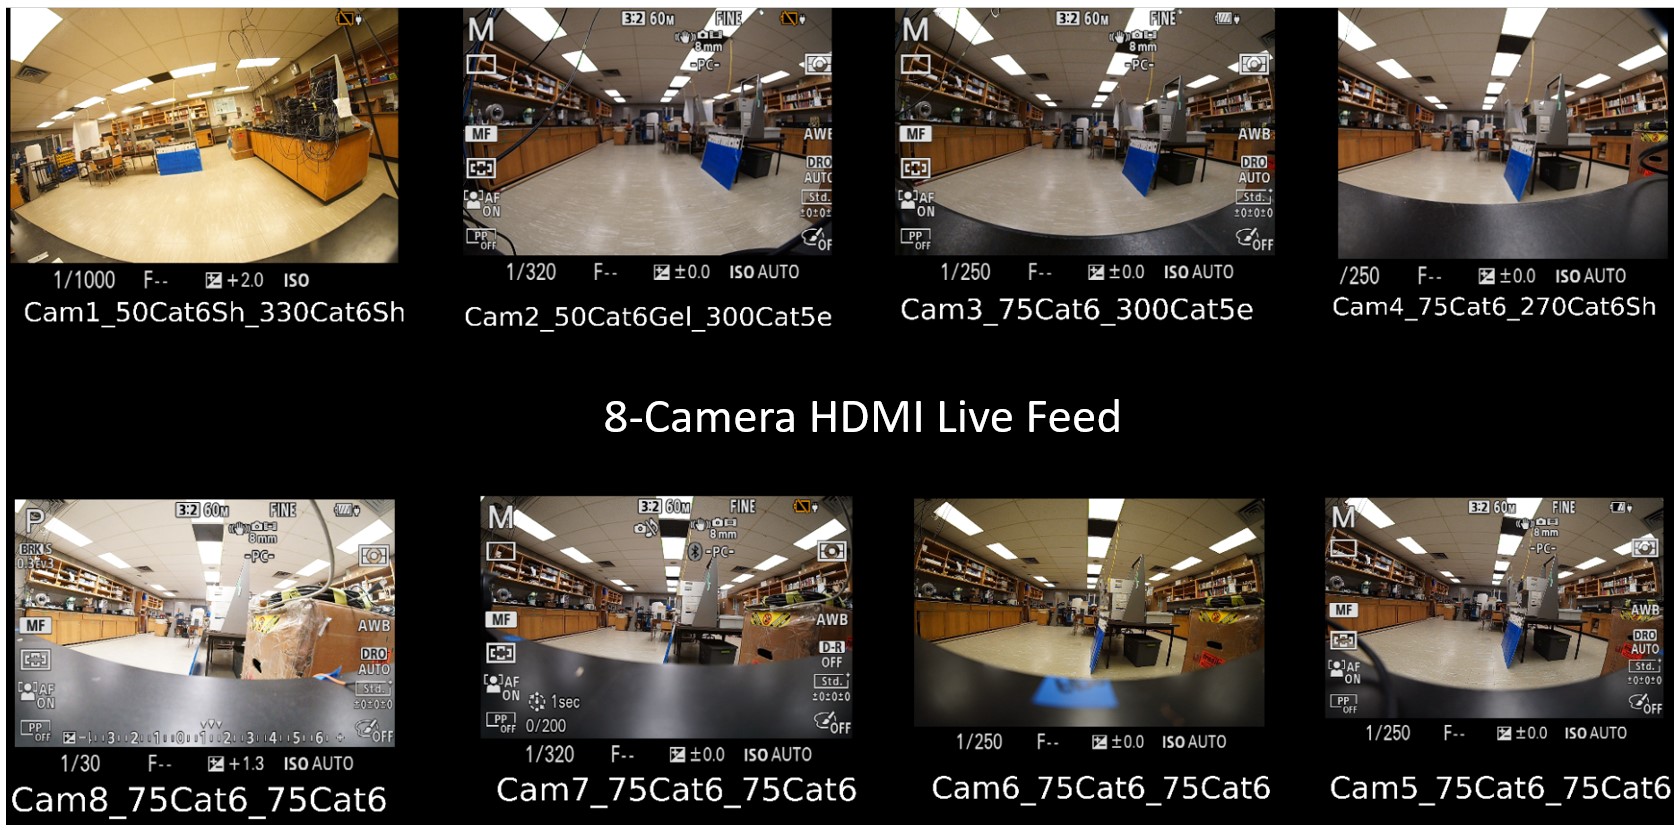 Fig. 4: 8-Camera HDMI Live Feed